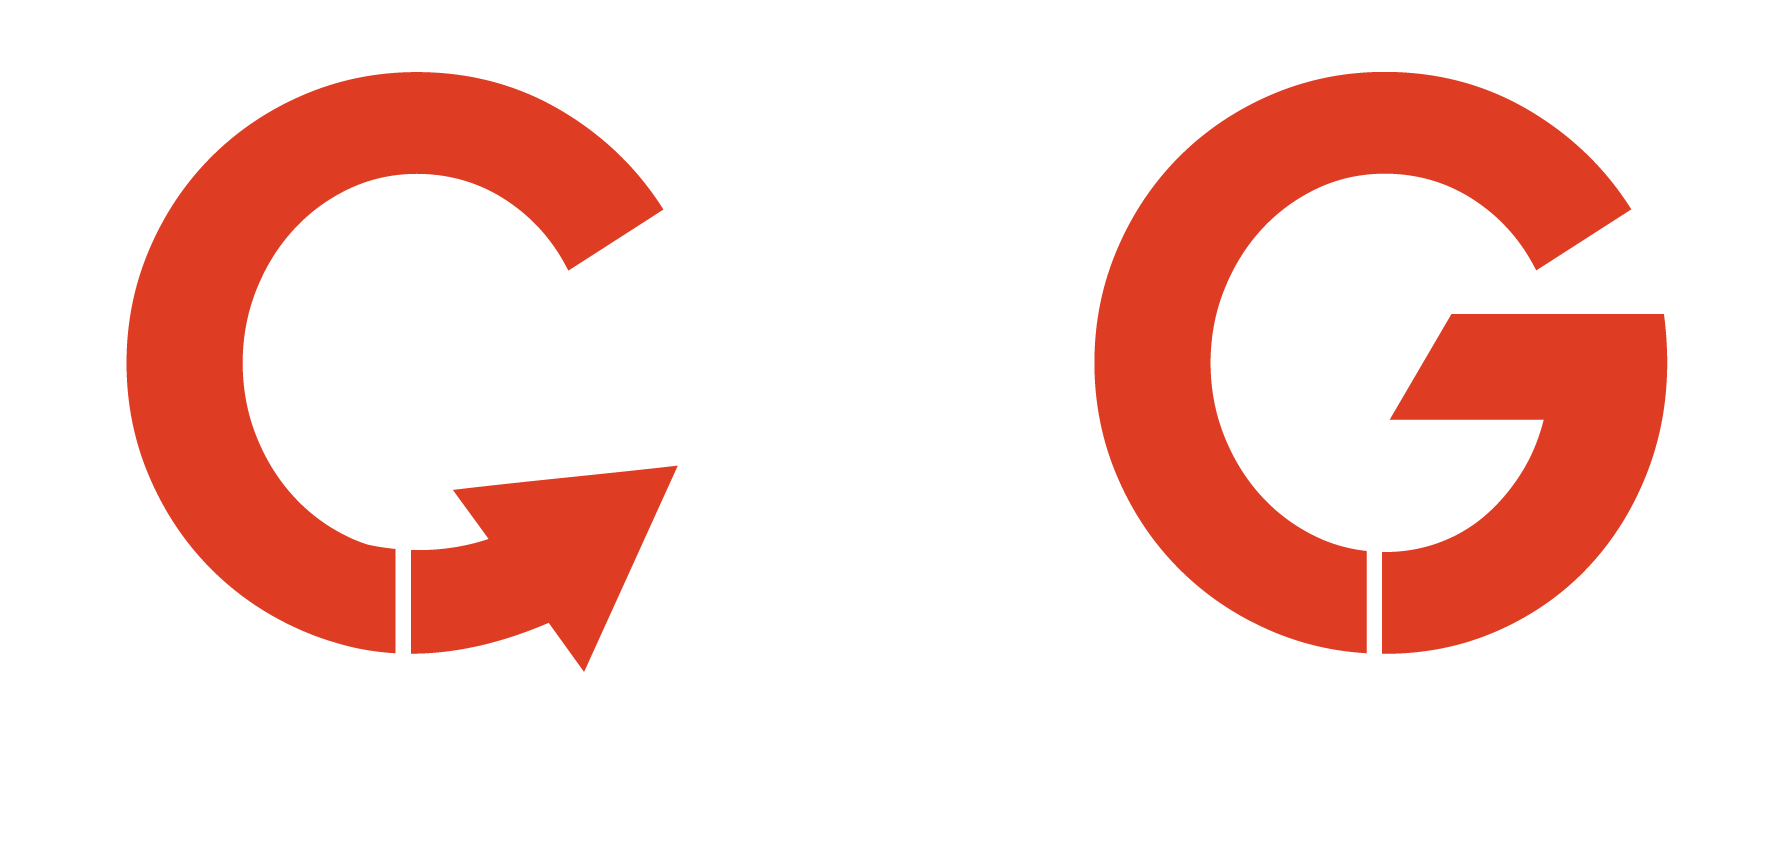 (c) Clgtransportes.com